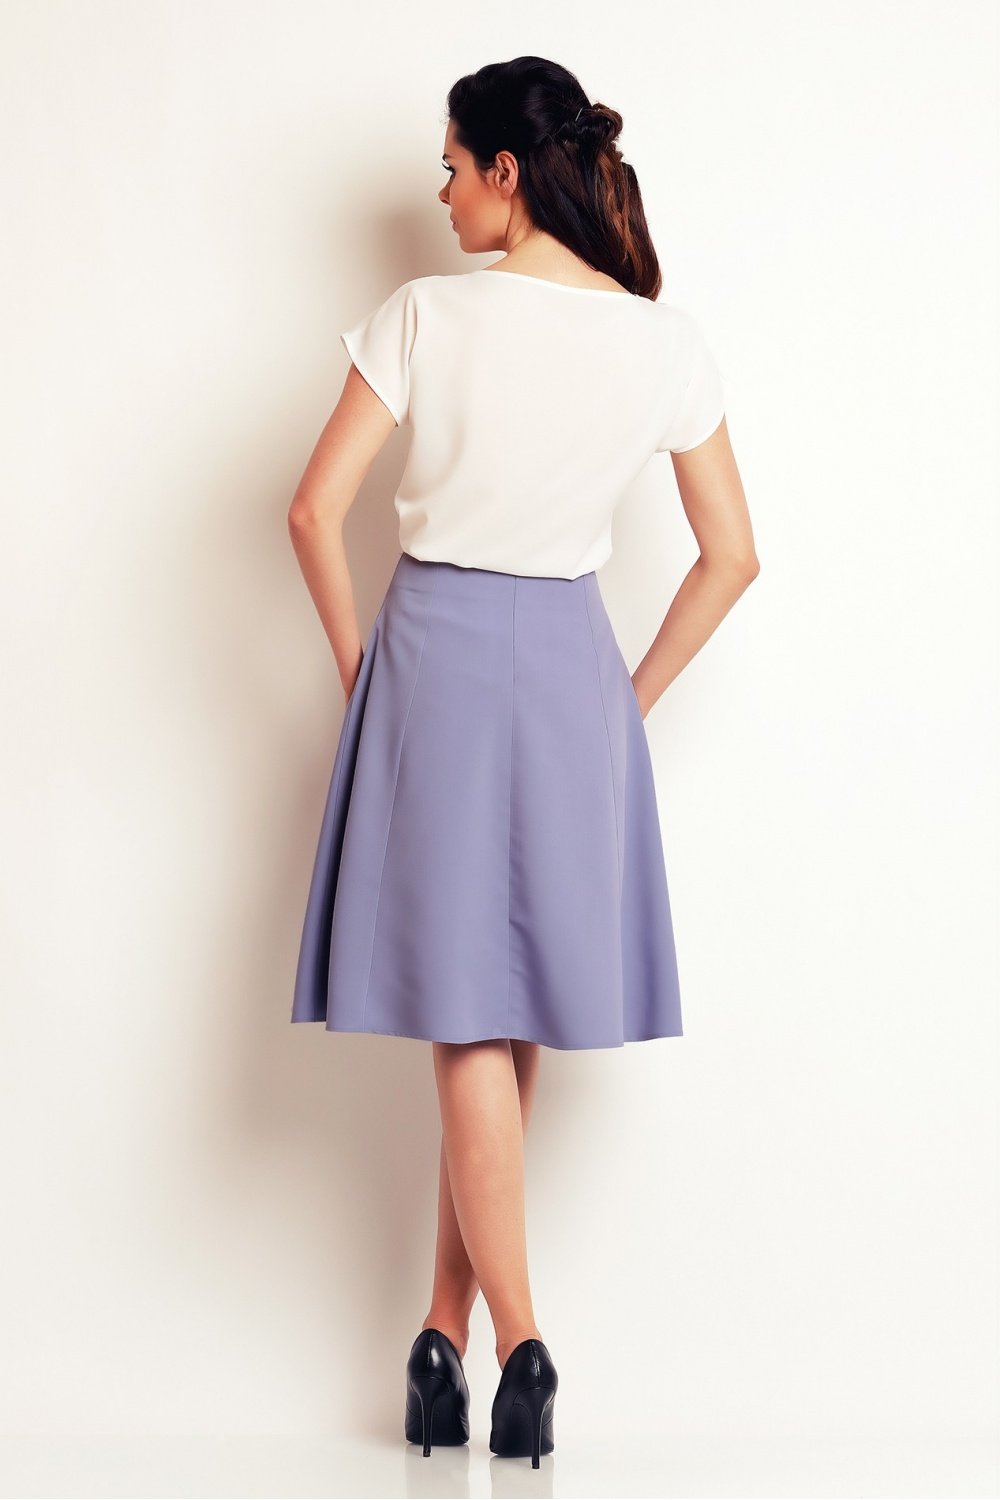 Skirt model 140016 awama Posh Styles Apparel